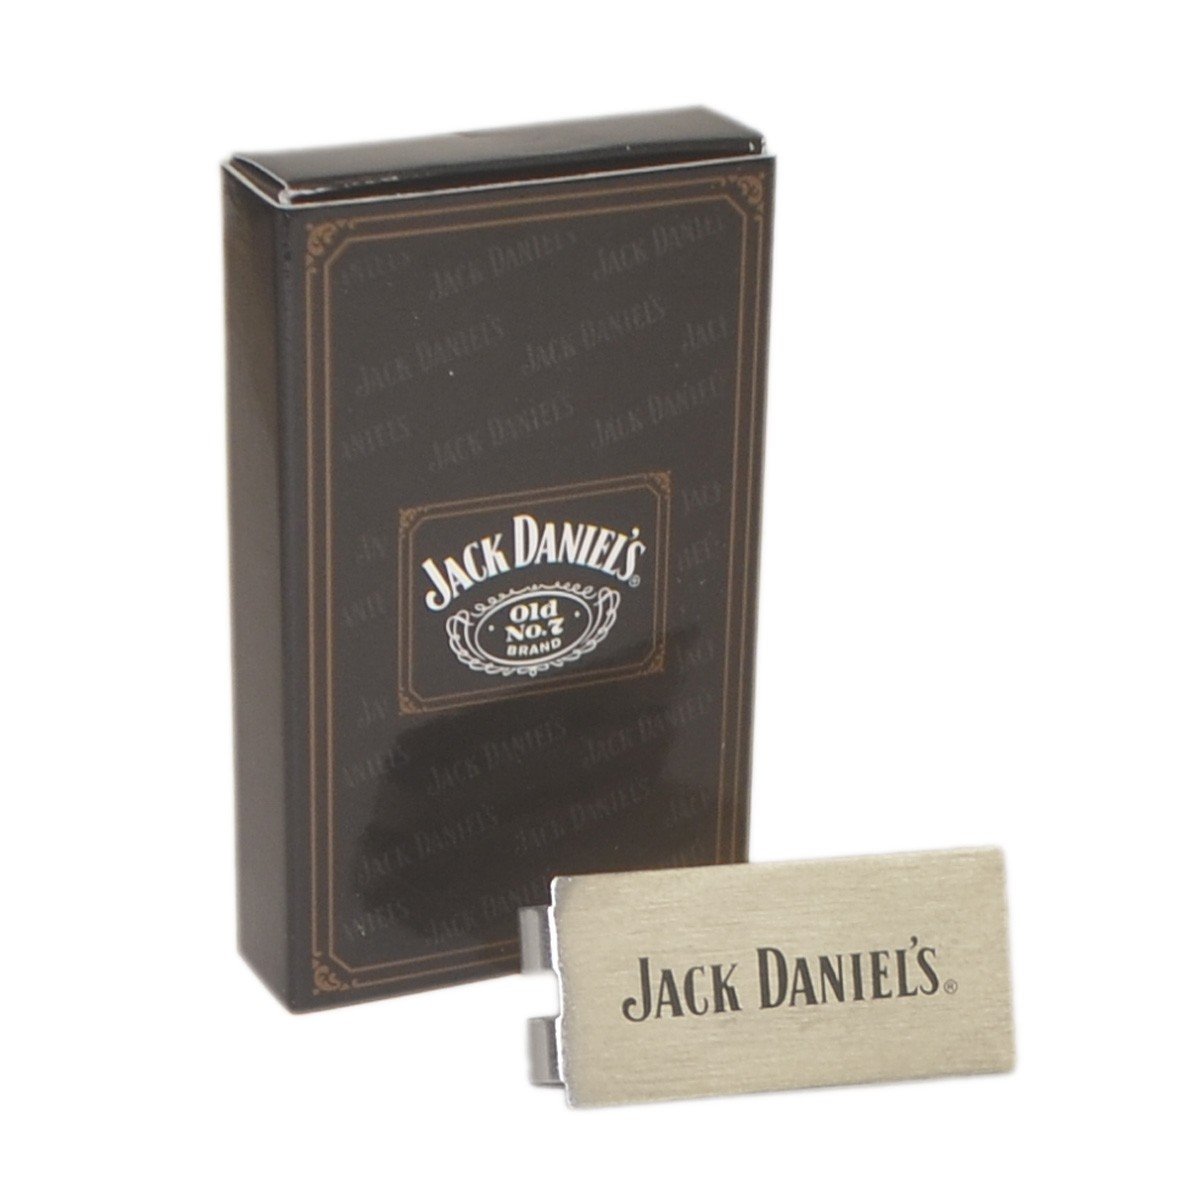 Official Branded Jack Daniels Money Clip - Pengeclips fra The Prince's Own hos The Prince Webshop